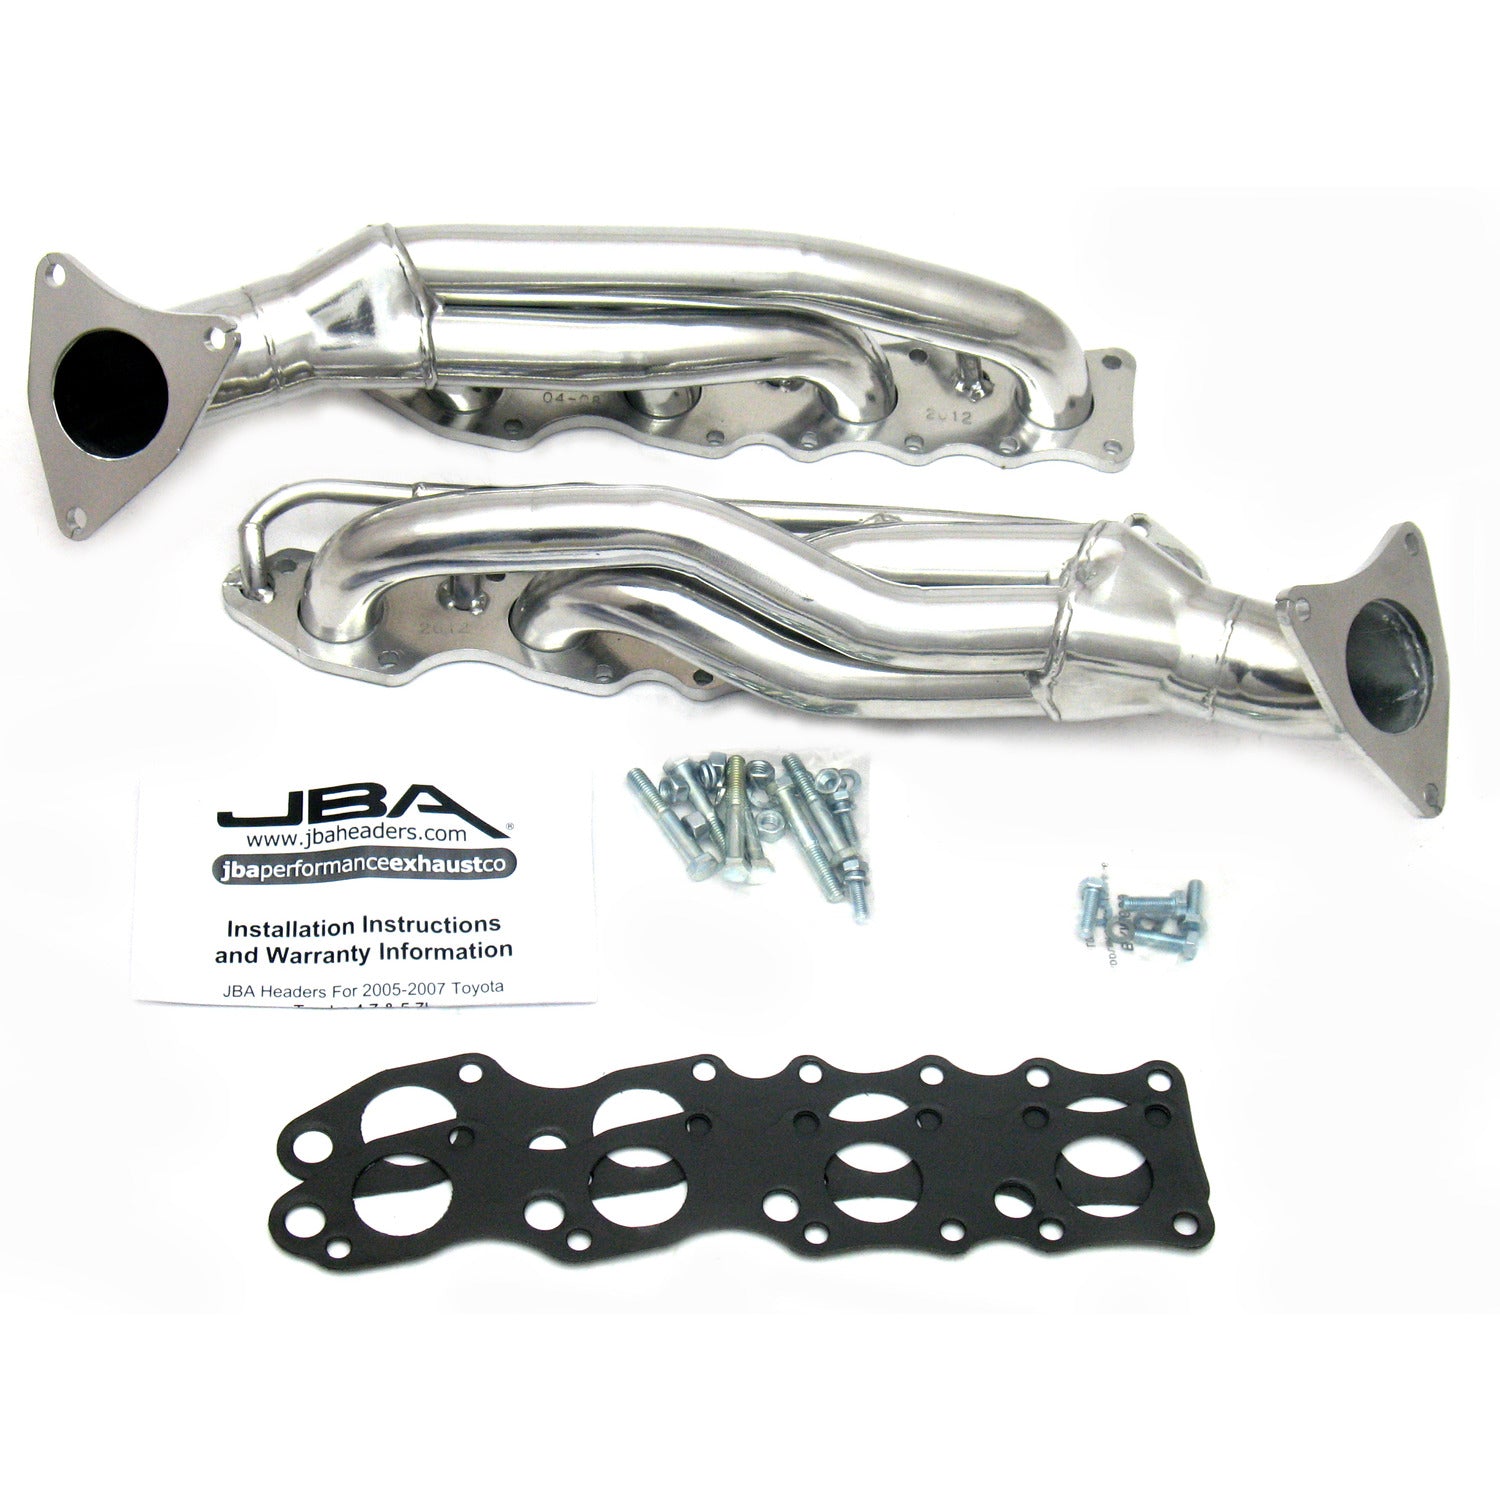 JBA Performance Exhaust 2012SJS 1 5/8" Header Shorty Stainless Steel 07-19 Toyota Tundra 5.7L Silver Ceramic